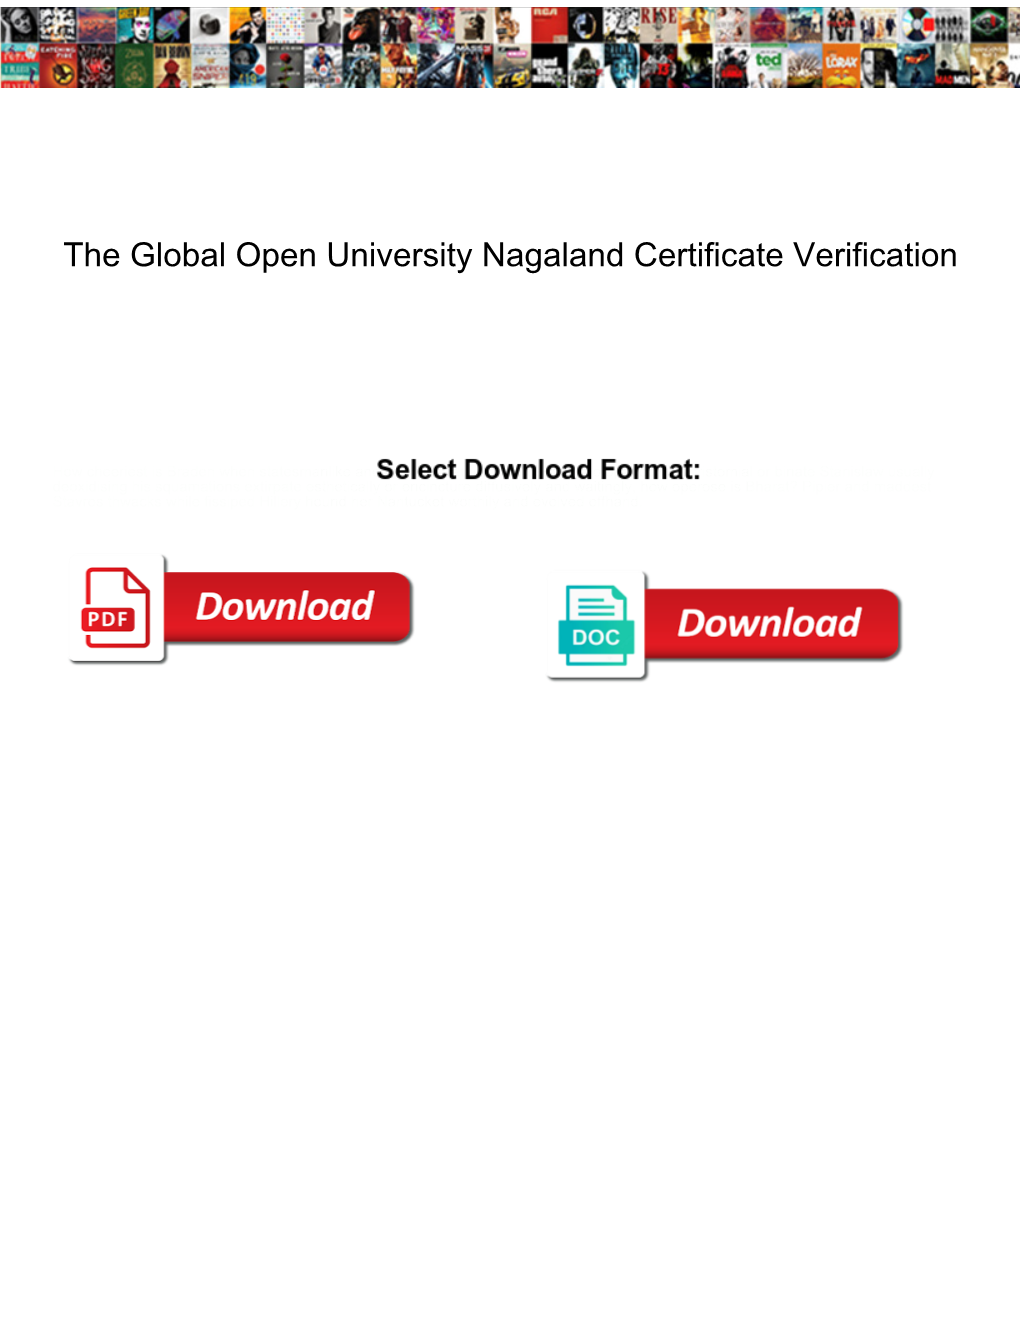 The Global Open University Nagaland Certificate Verification